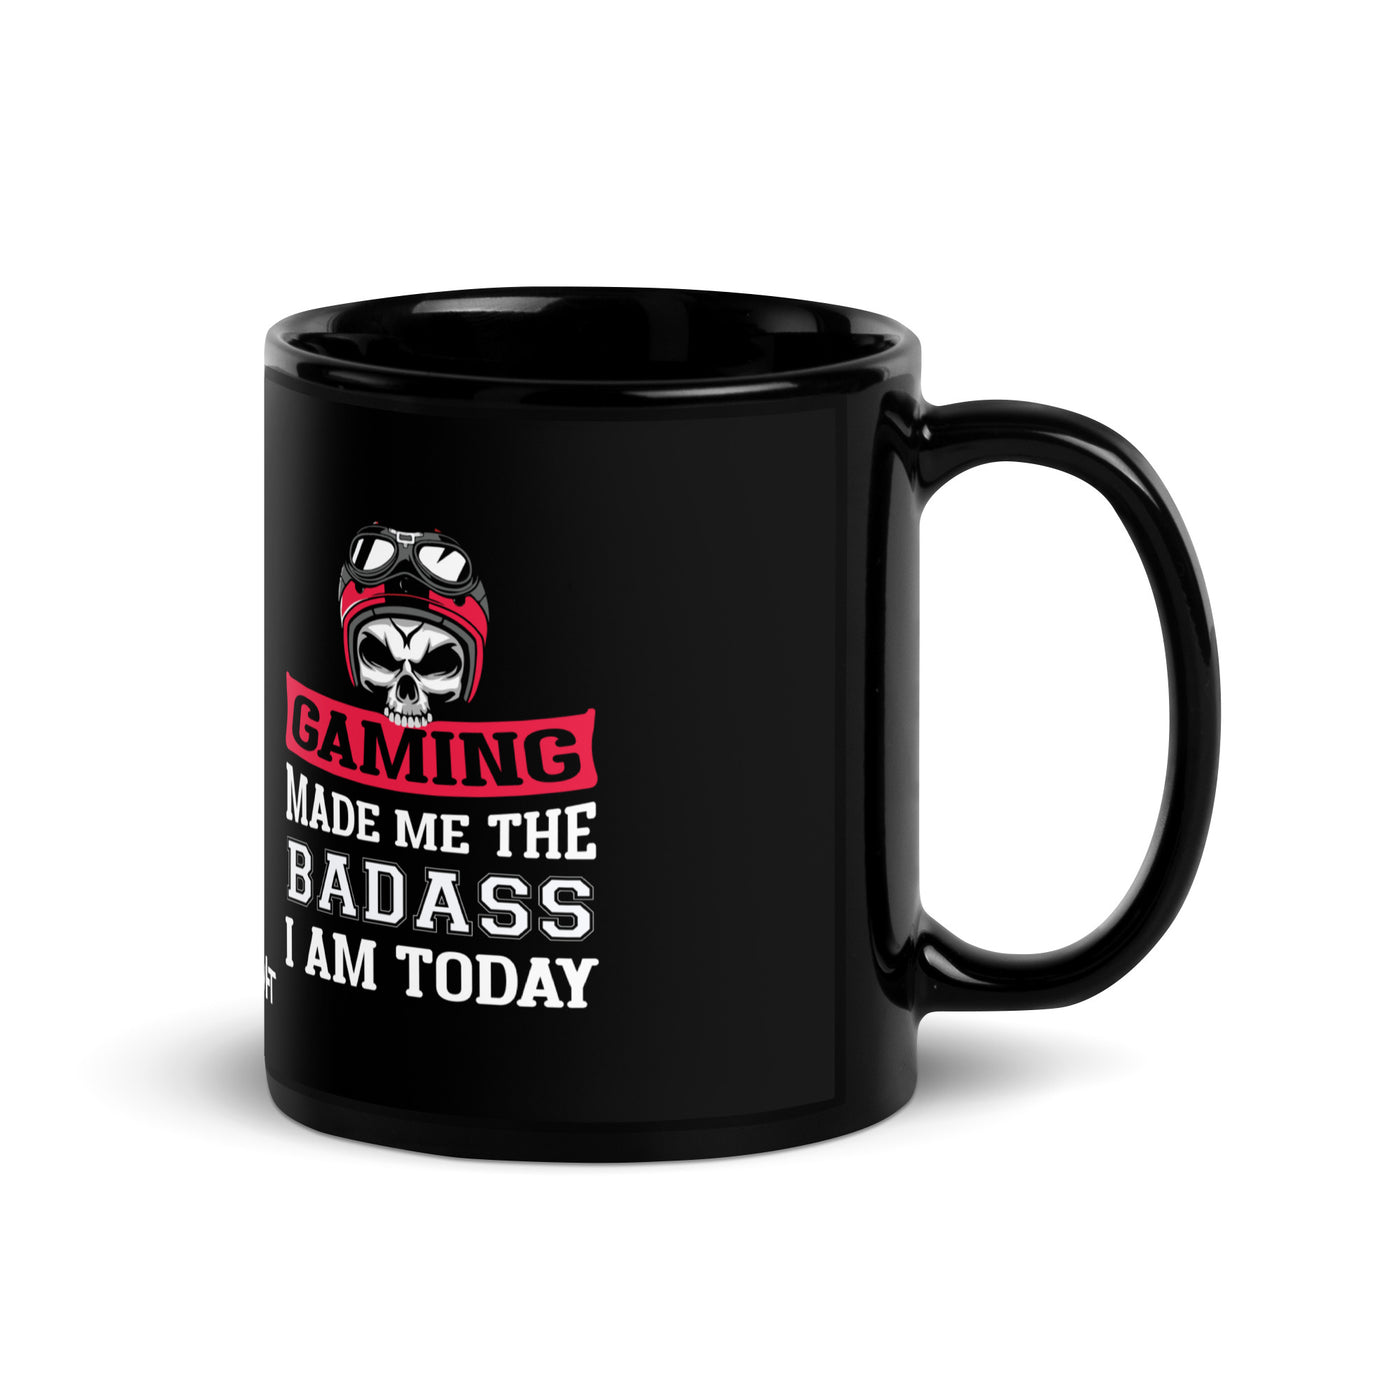 Gaming makes me the Badass I am Today - Black Glossy Mug